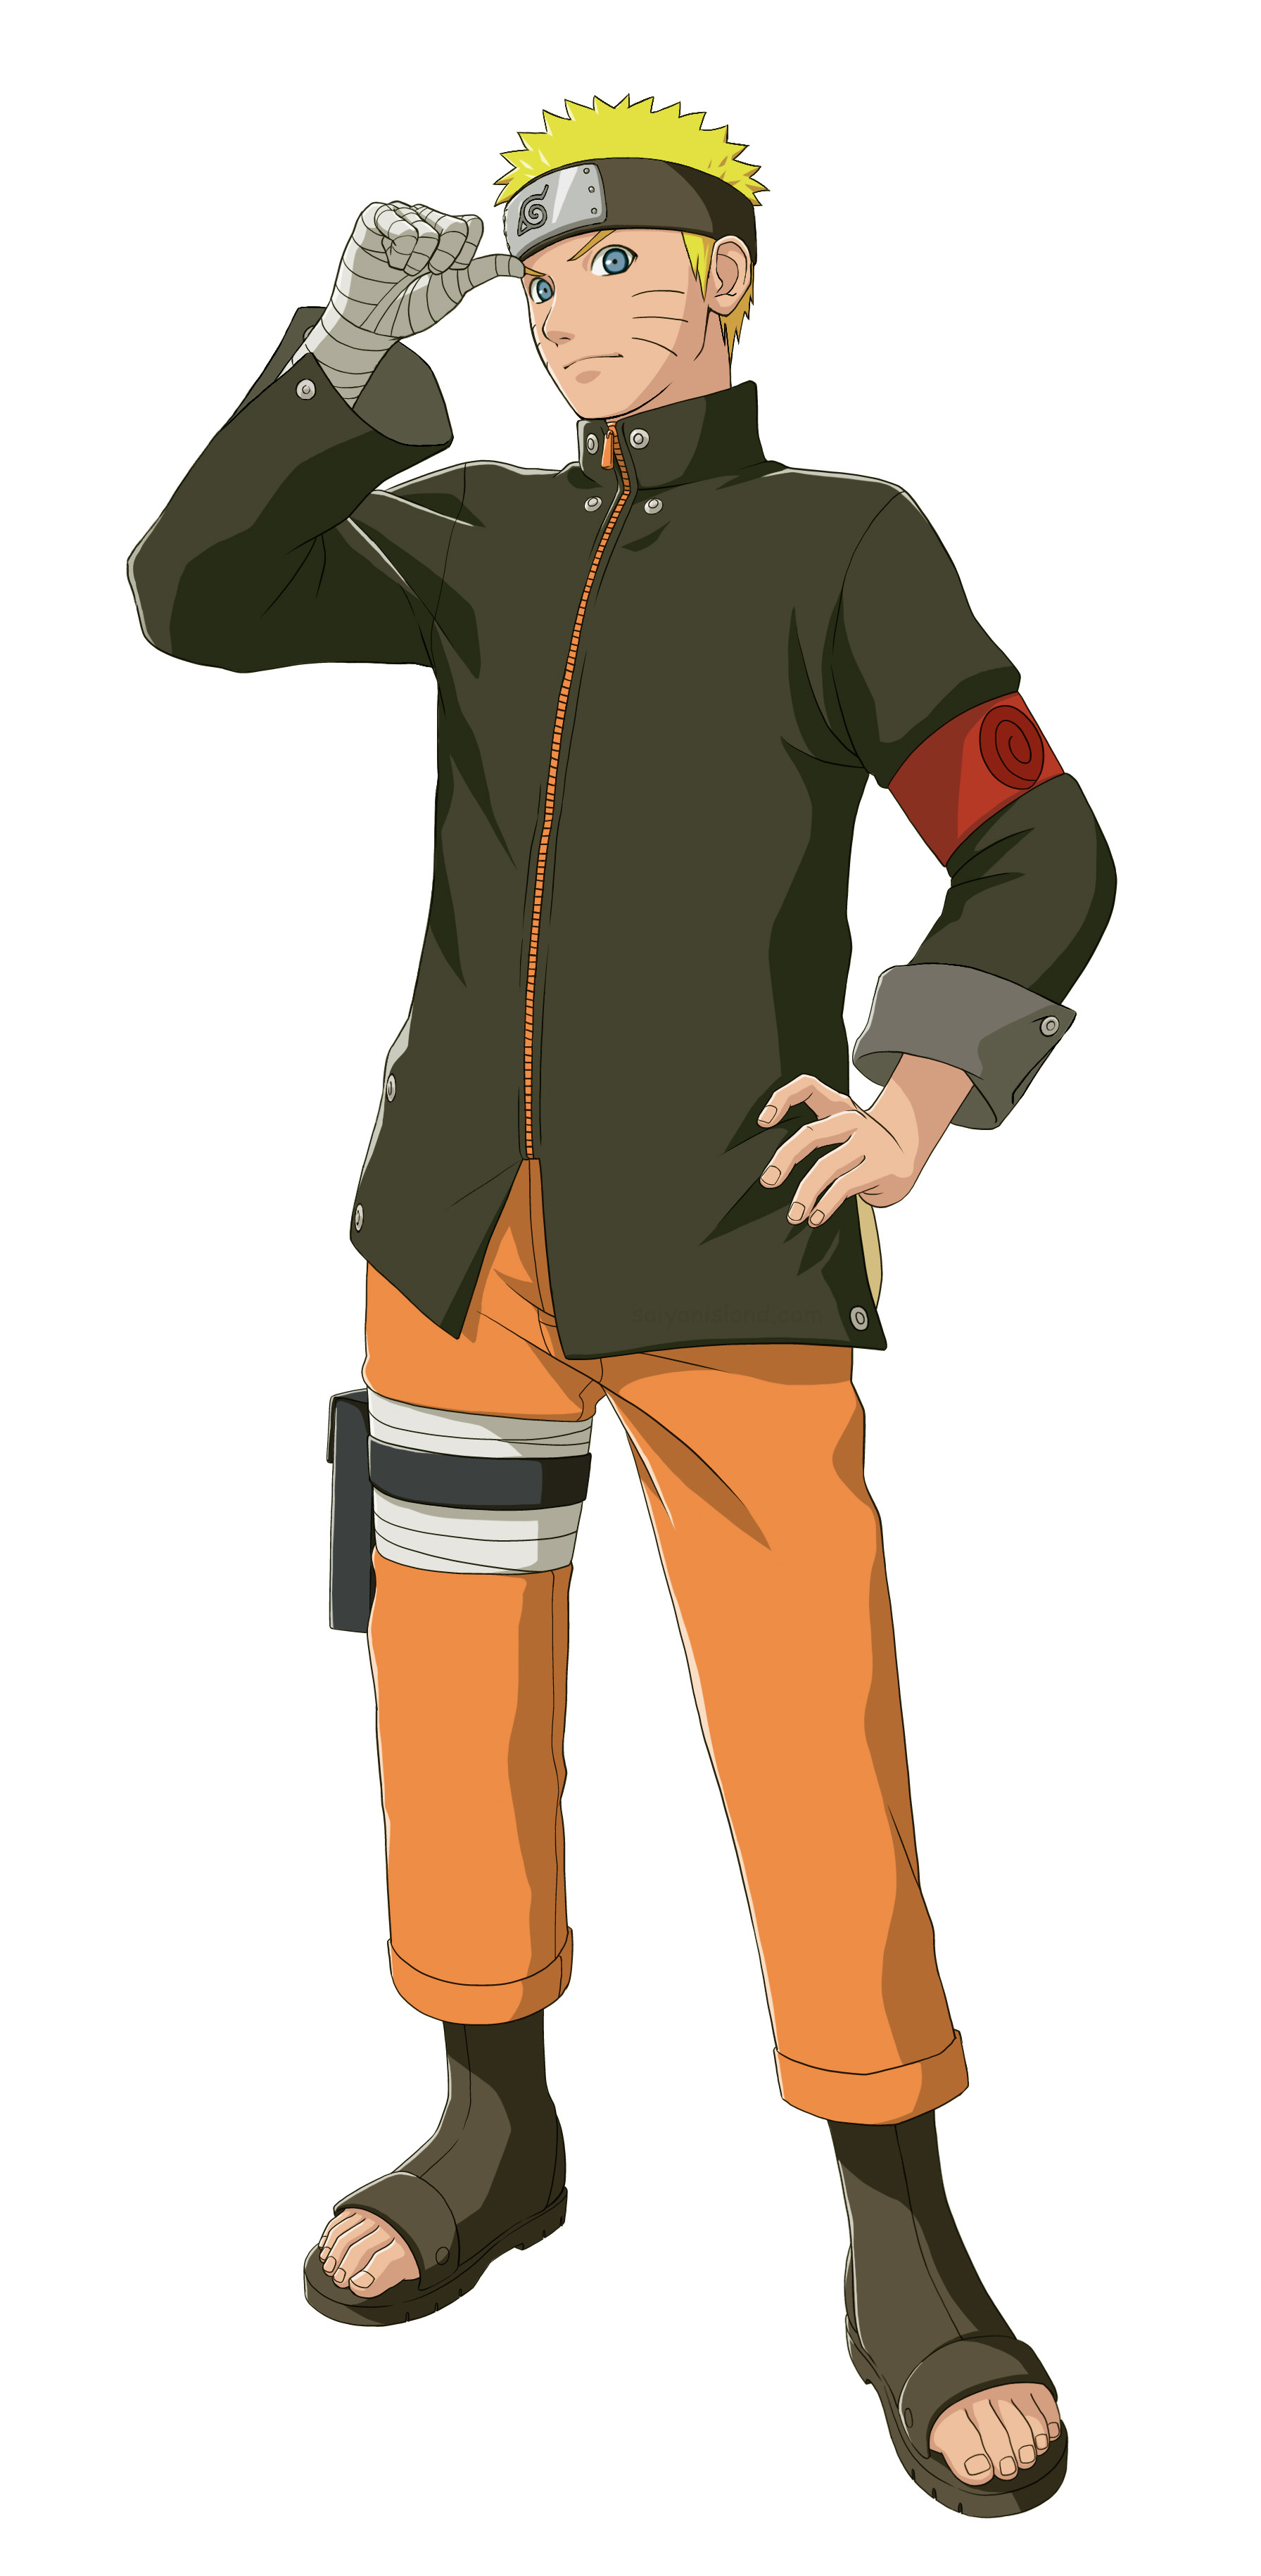 Boruto: Naruto the Movie Info by GoldLiger on DeviantArt